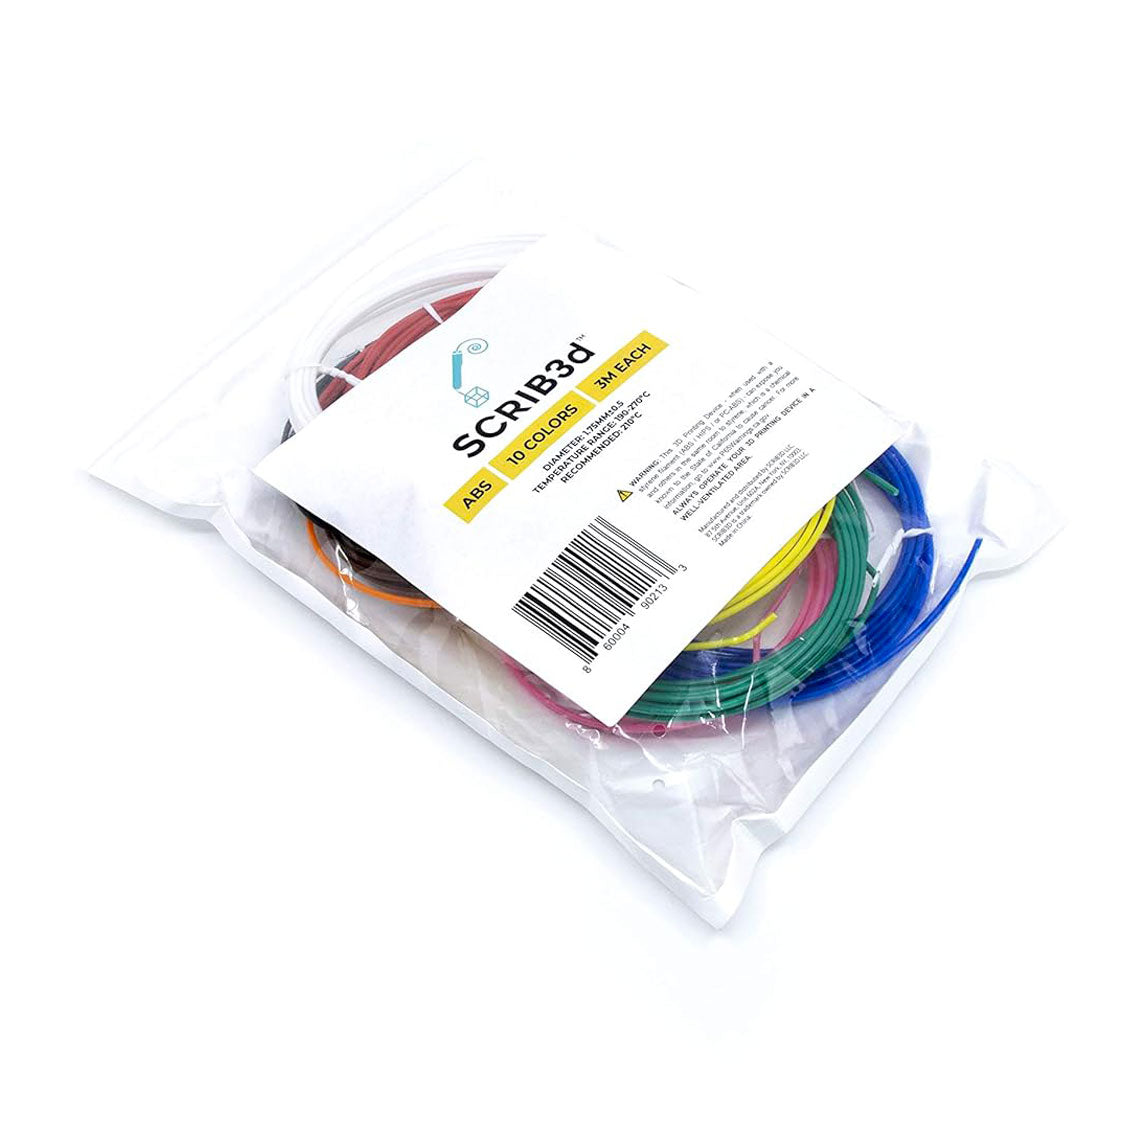 Scrib3D ABS Plastic Filament Refill Pack